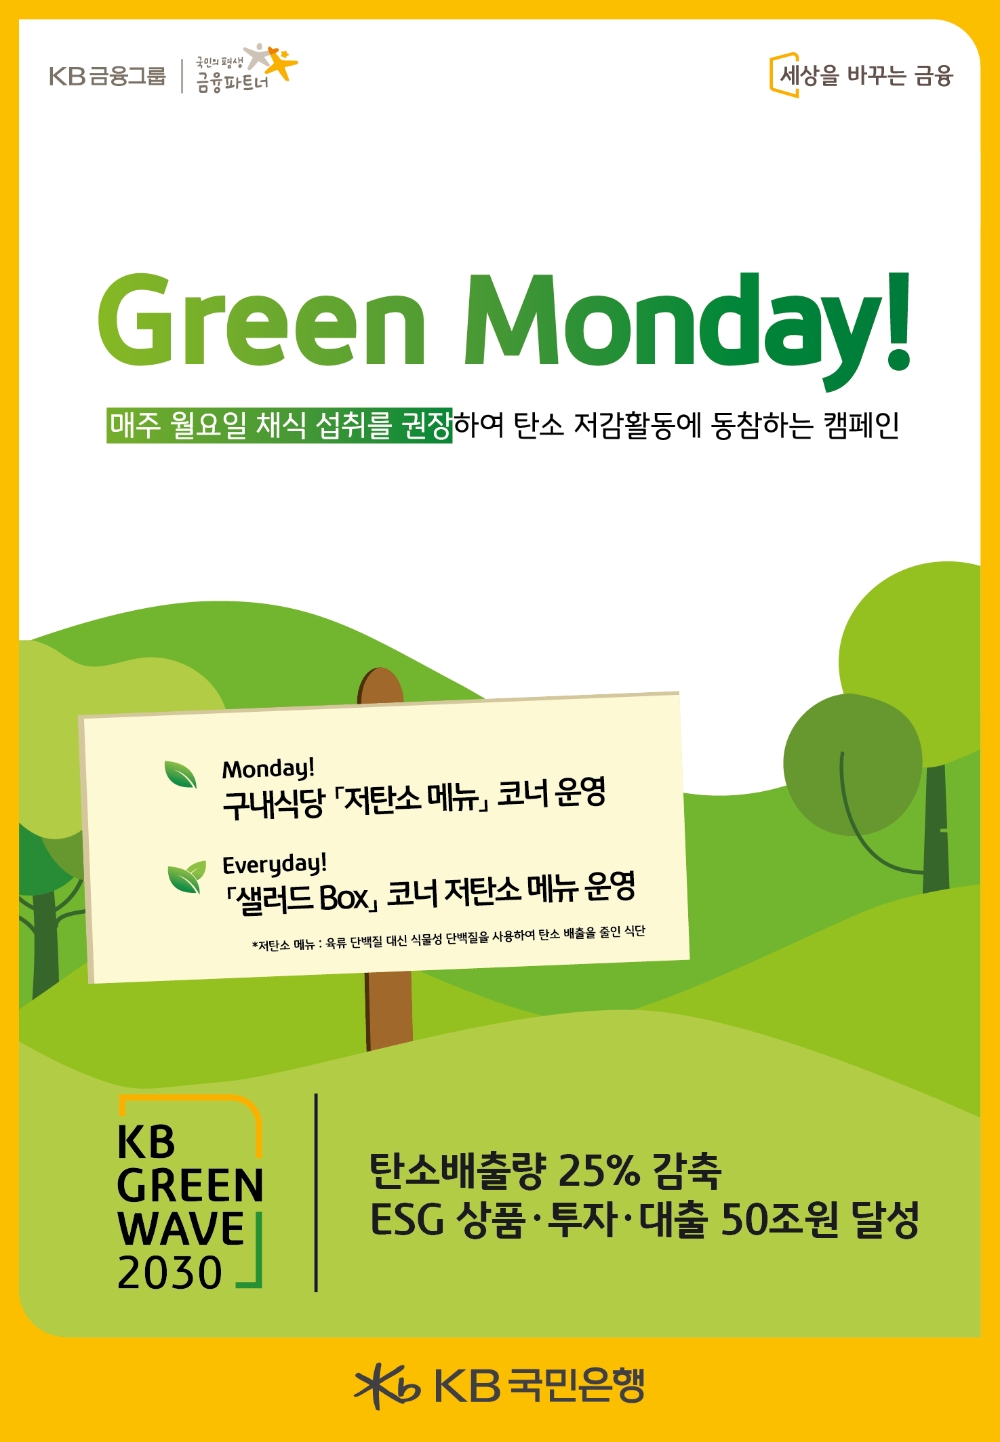 KB국민은행, 직원과 지구의 건강을 위한‘Green Monday’ 운영